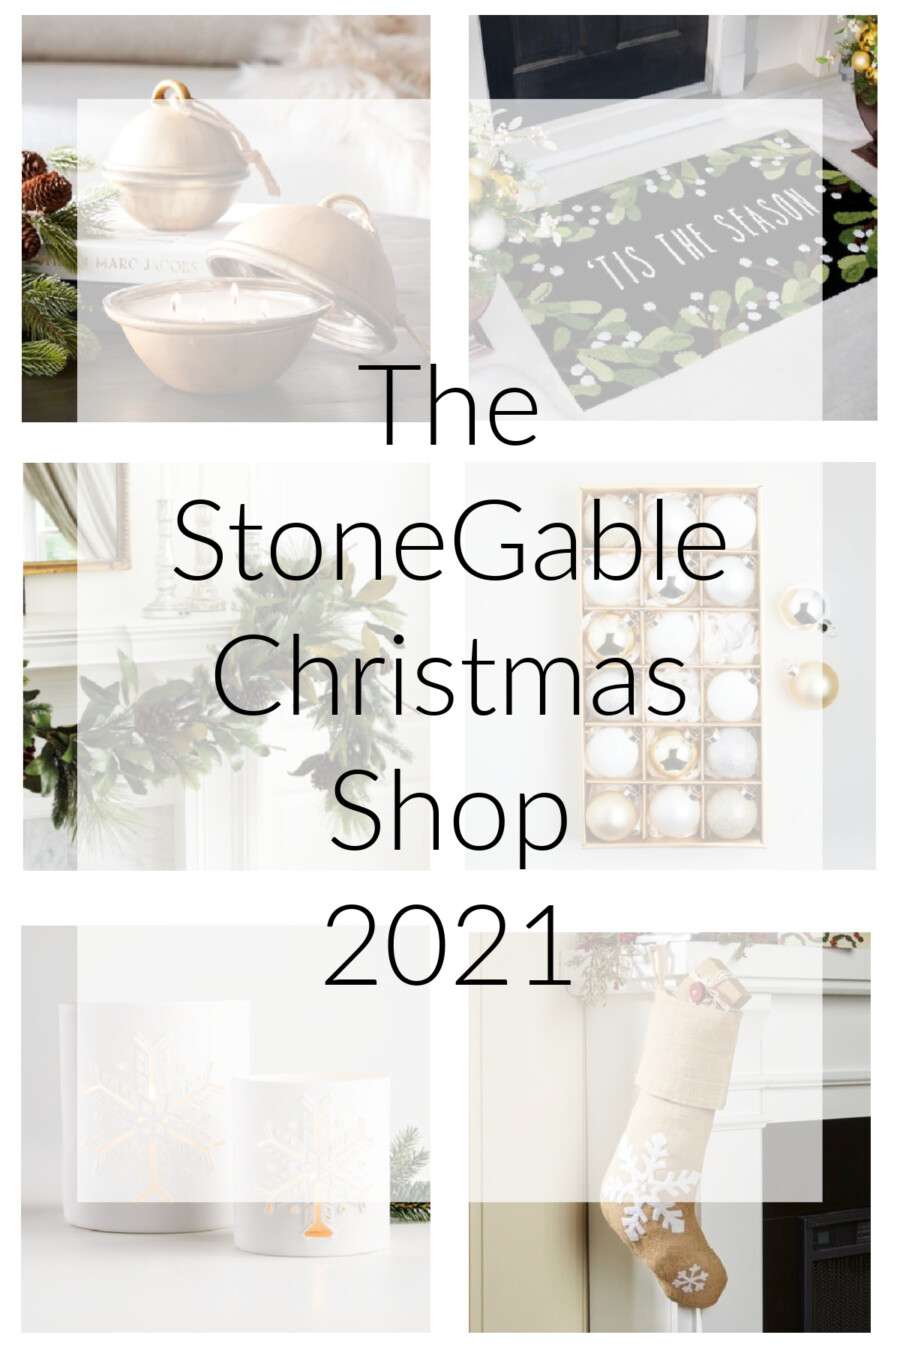 Introducing StoneGable’s 2022 Christmas Shops